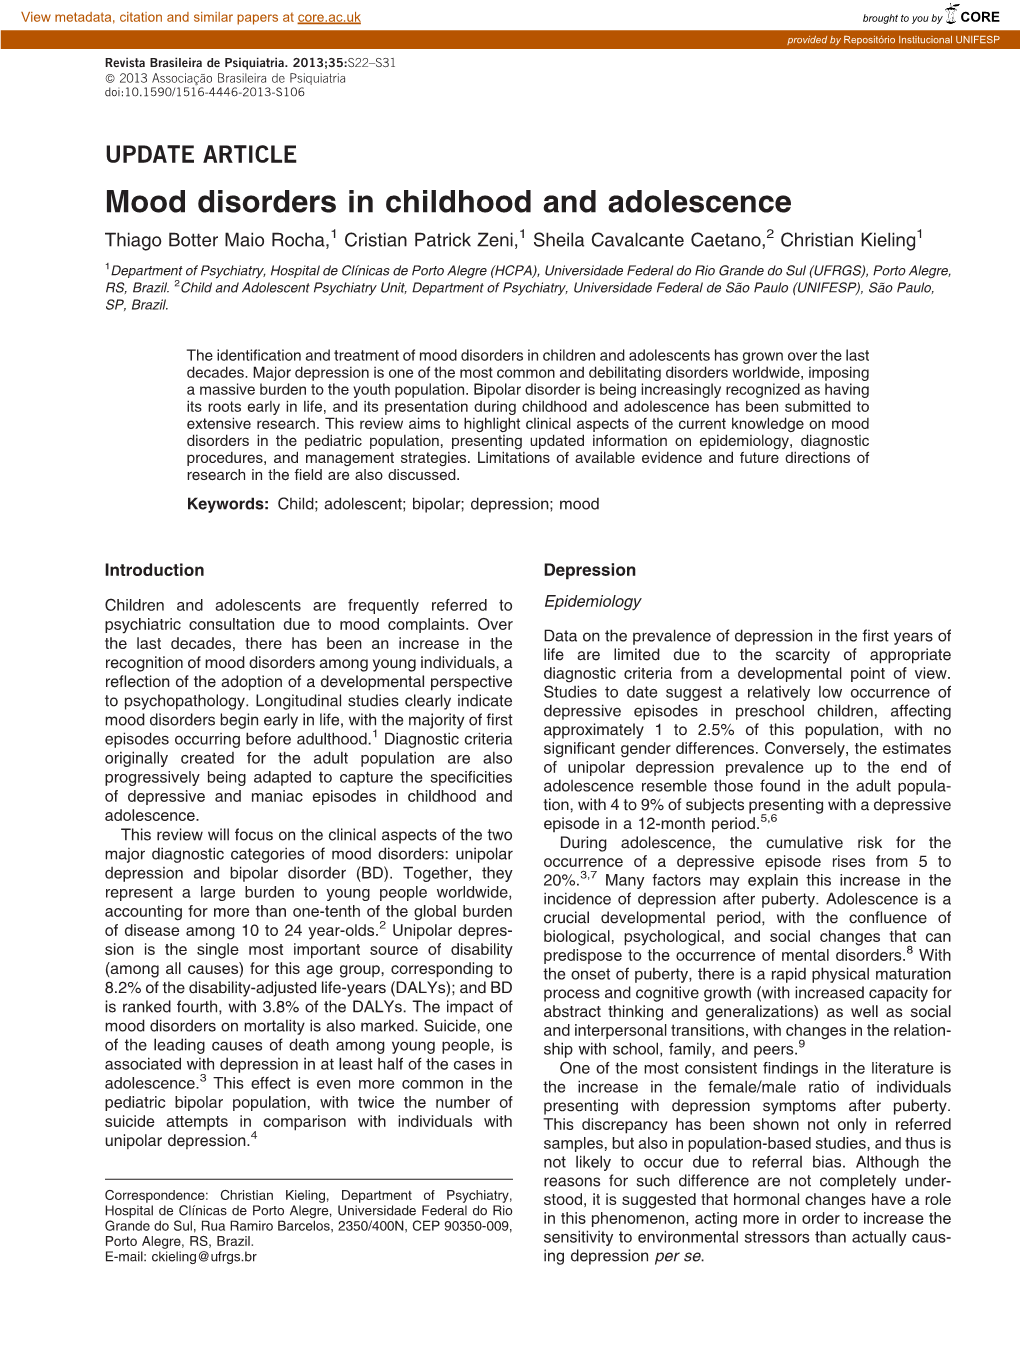 Mood Disorders in Childhood and Adolescence Thiago Botter Maio Rocha,1 Cristian Patrick Zeni,1 Sheila Cavalcante Caetano,2 Christian Kieling1